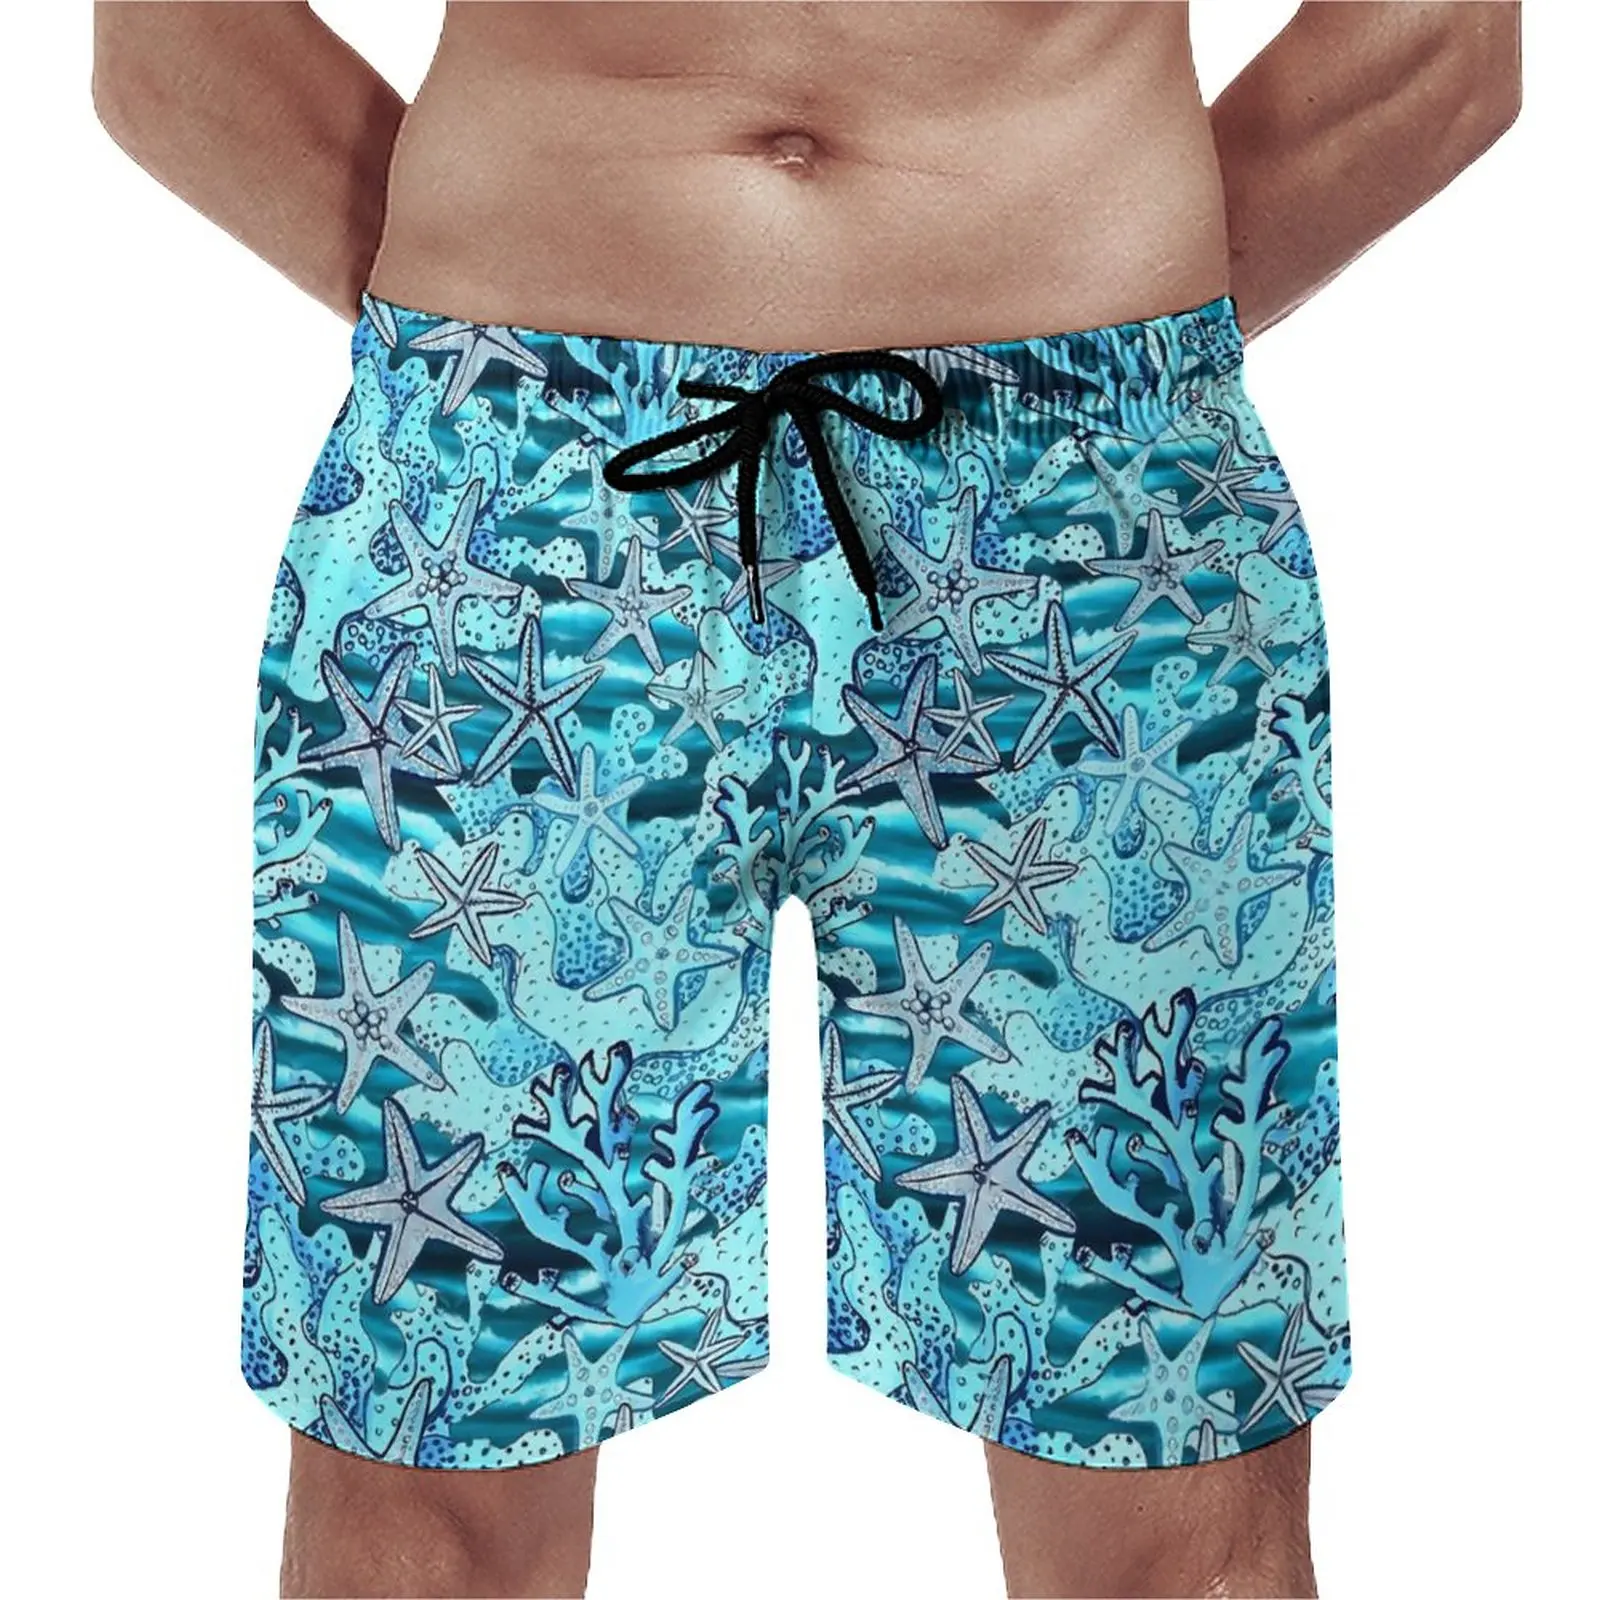 

Starfish Gym Shorts Summer Coral Reef Print Cute Beach Short Pants Males Sportswear Quick Dry Pattern Beach Trunks